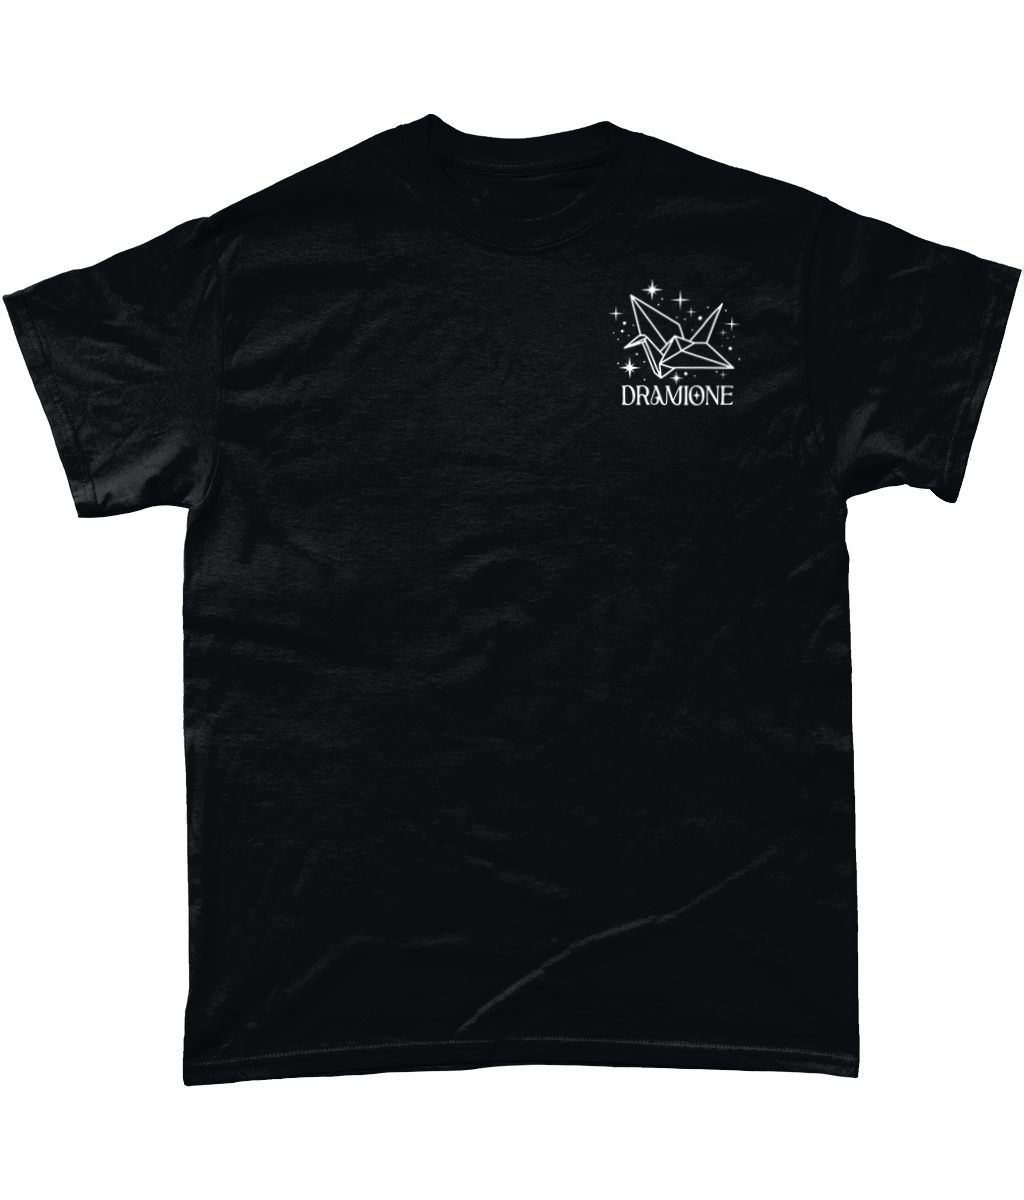 Dramione Era 'Manacled' Inspired Unisex Fit T-Shirt